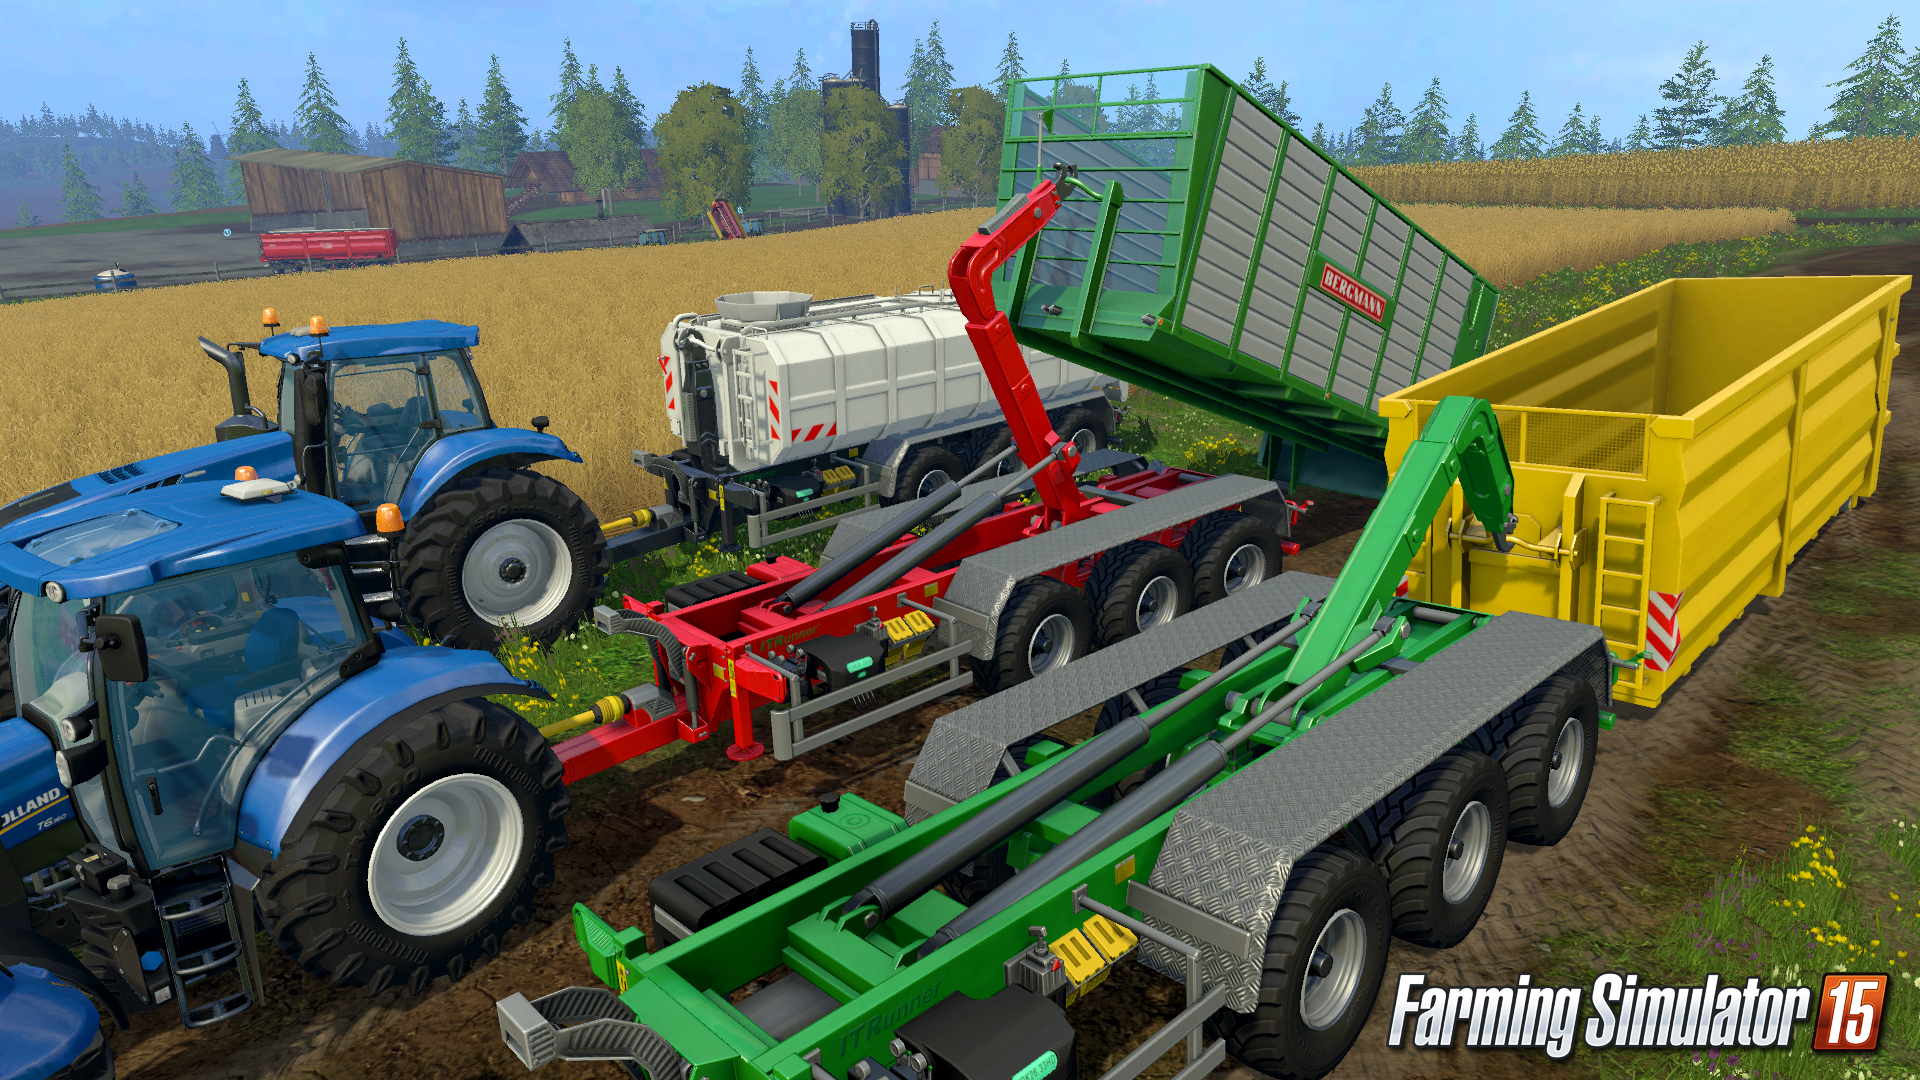 Farming simulator 2015 patch download pc